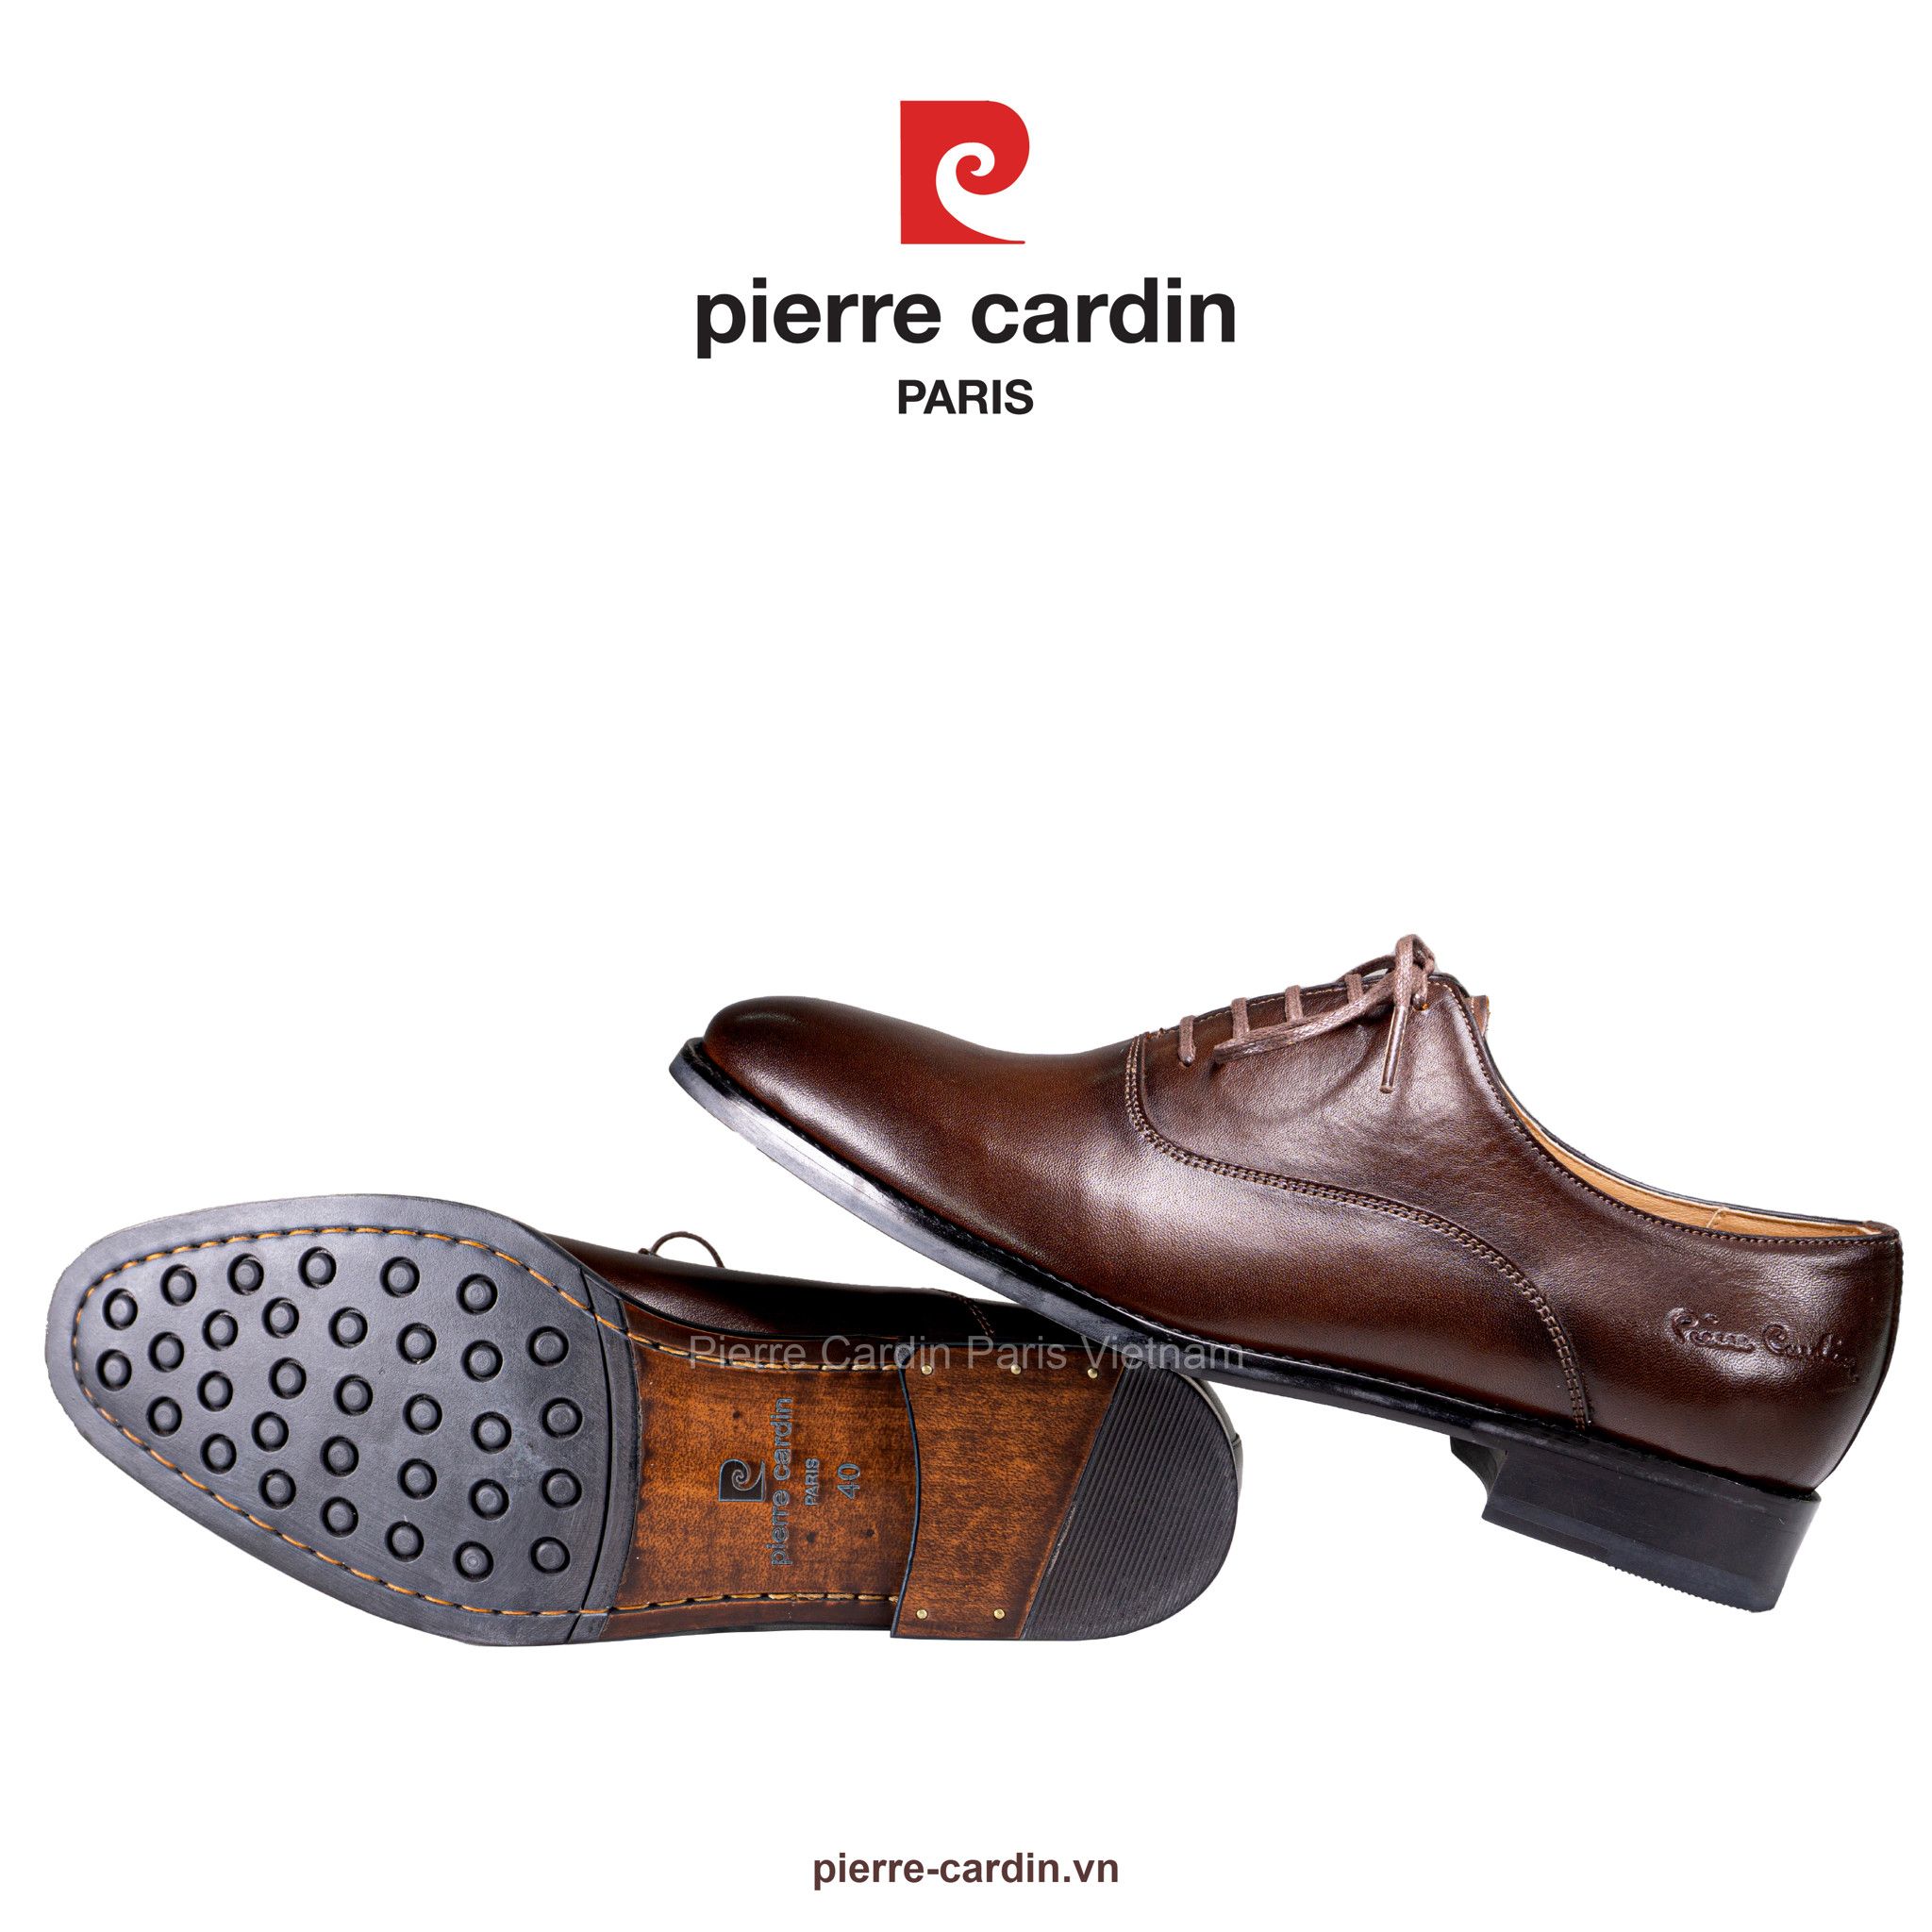 Pierre Cardin Paris Vietnam: Giày Classic Oxford Pierre Cardin - PCMFWLG 355